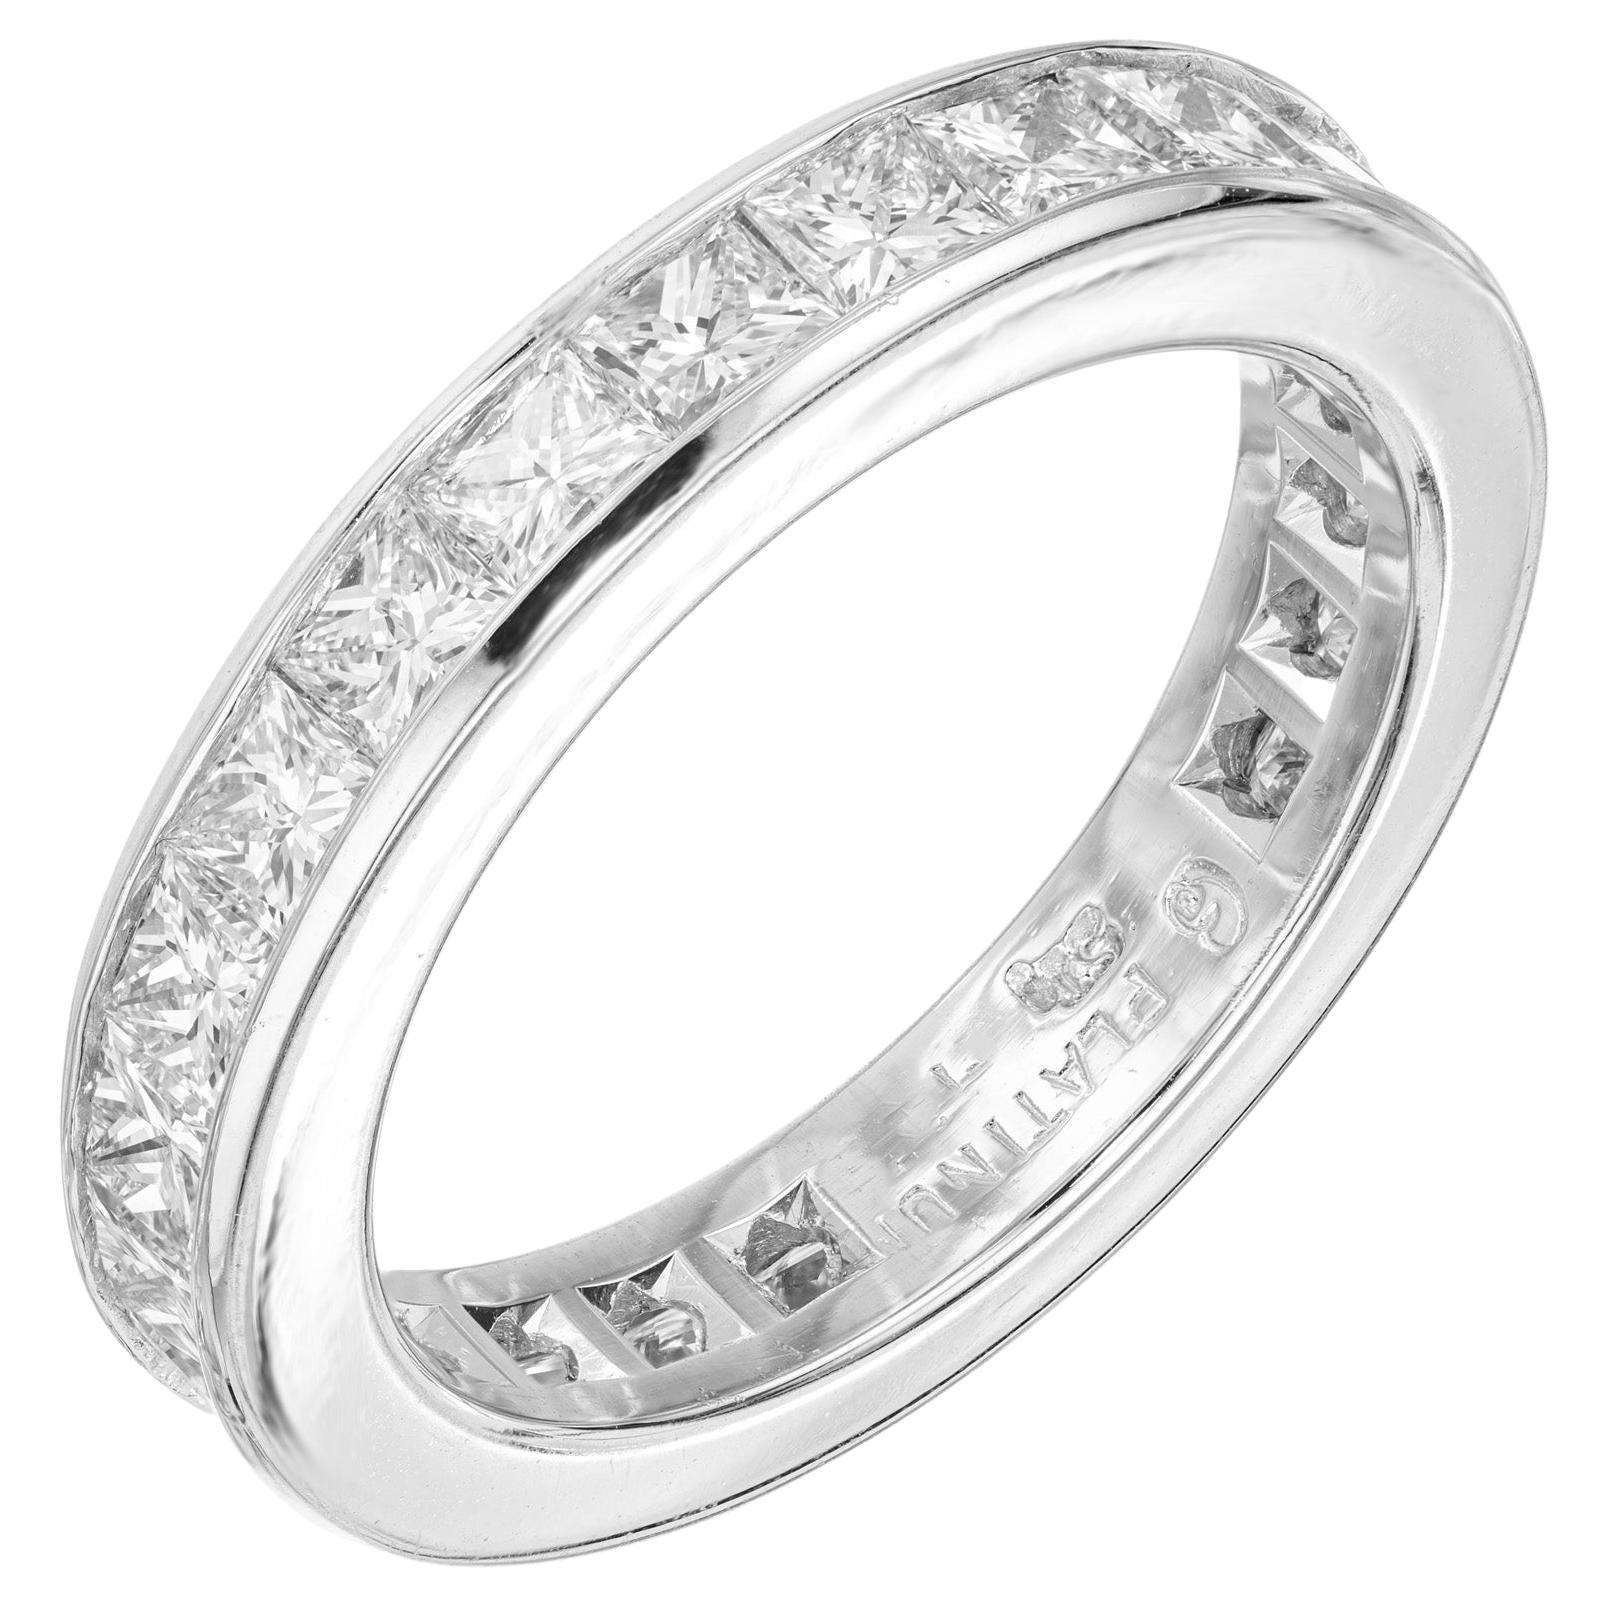 Byard F. Brogan 2.40 Carat Diamond Platinum Eternity Wedding Band Ring